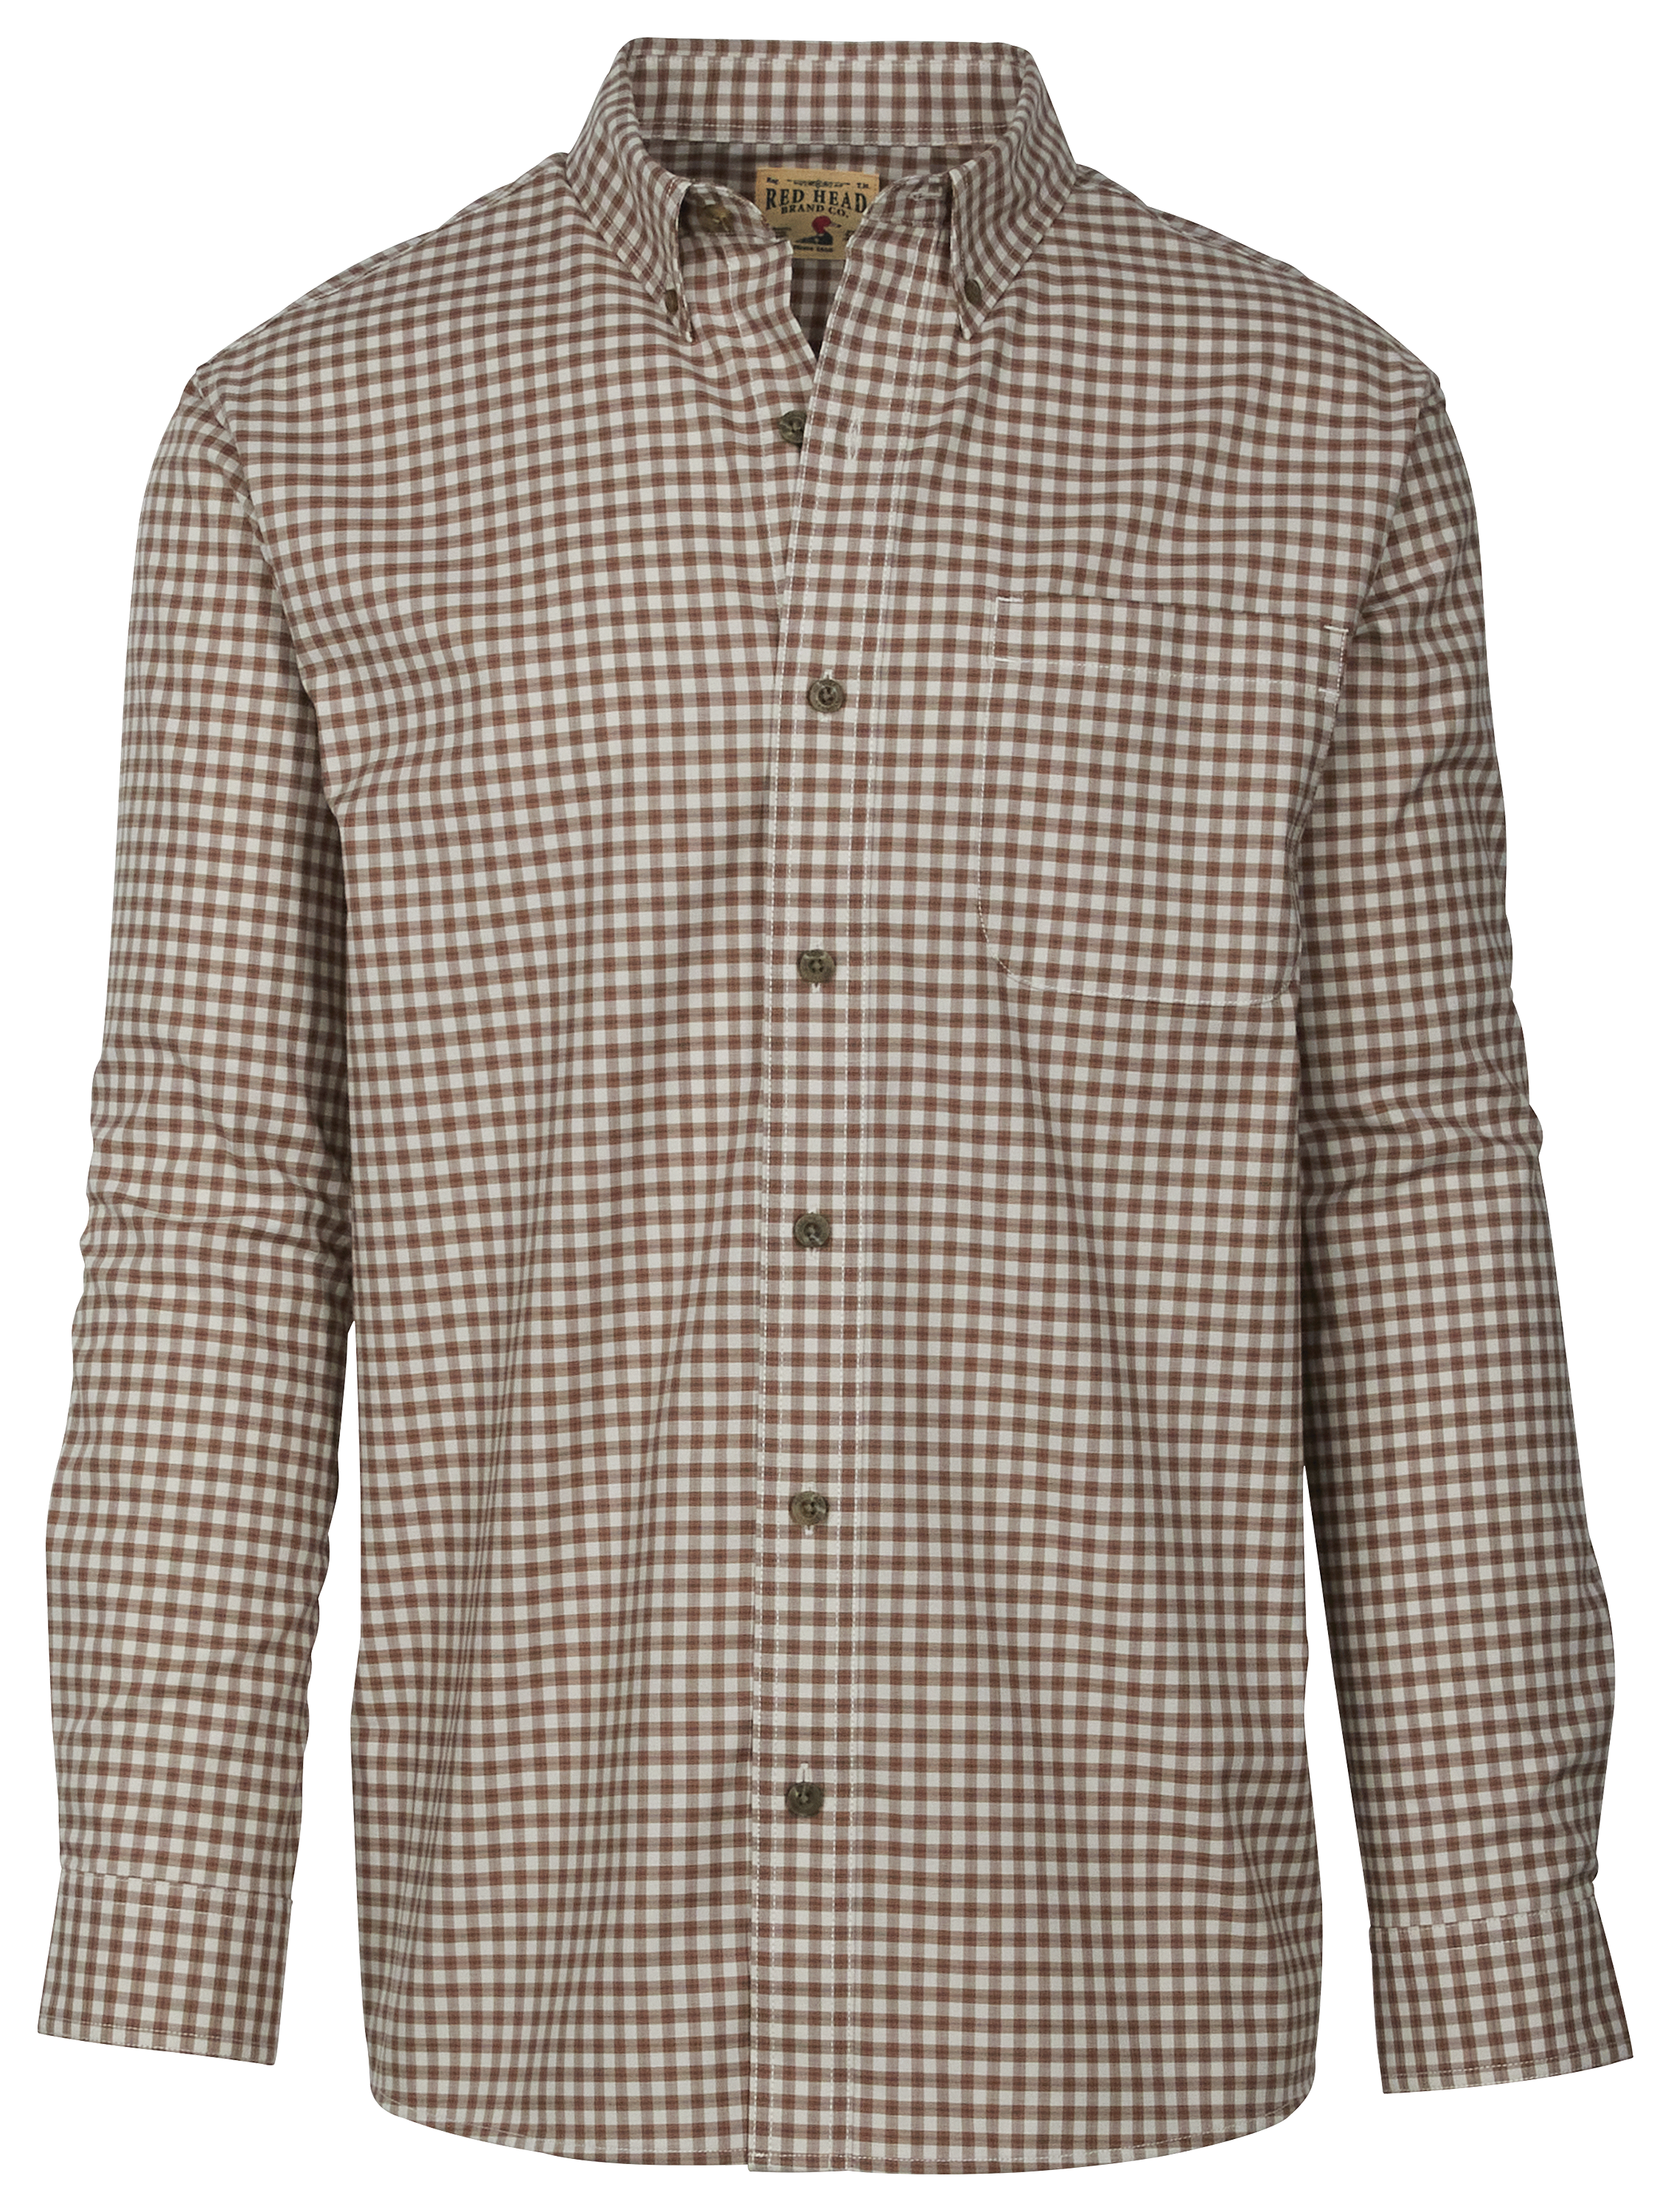 Redhead Wrinkle-Free Easy-Care Button-Down Long-Sleeve Shirt for Men - Dark Burgundy Gingham - LT